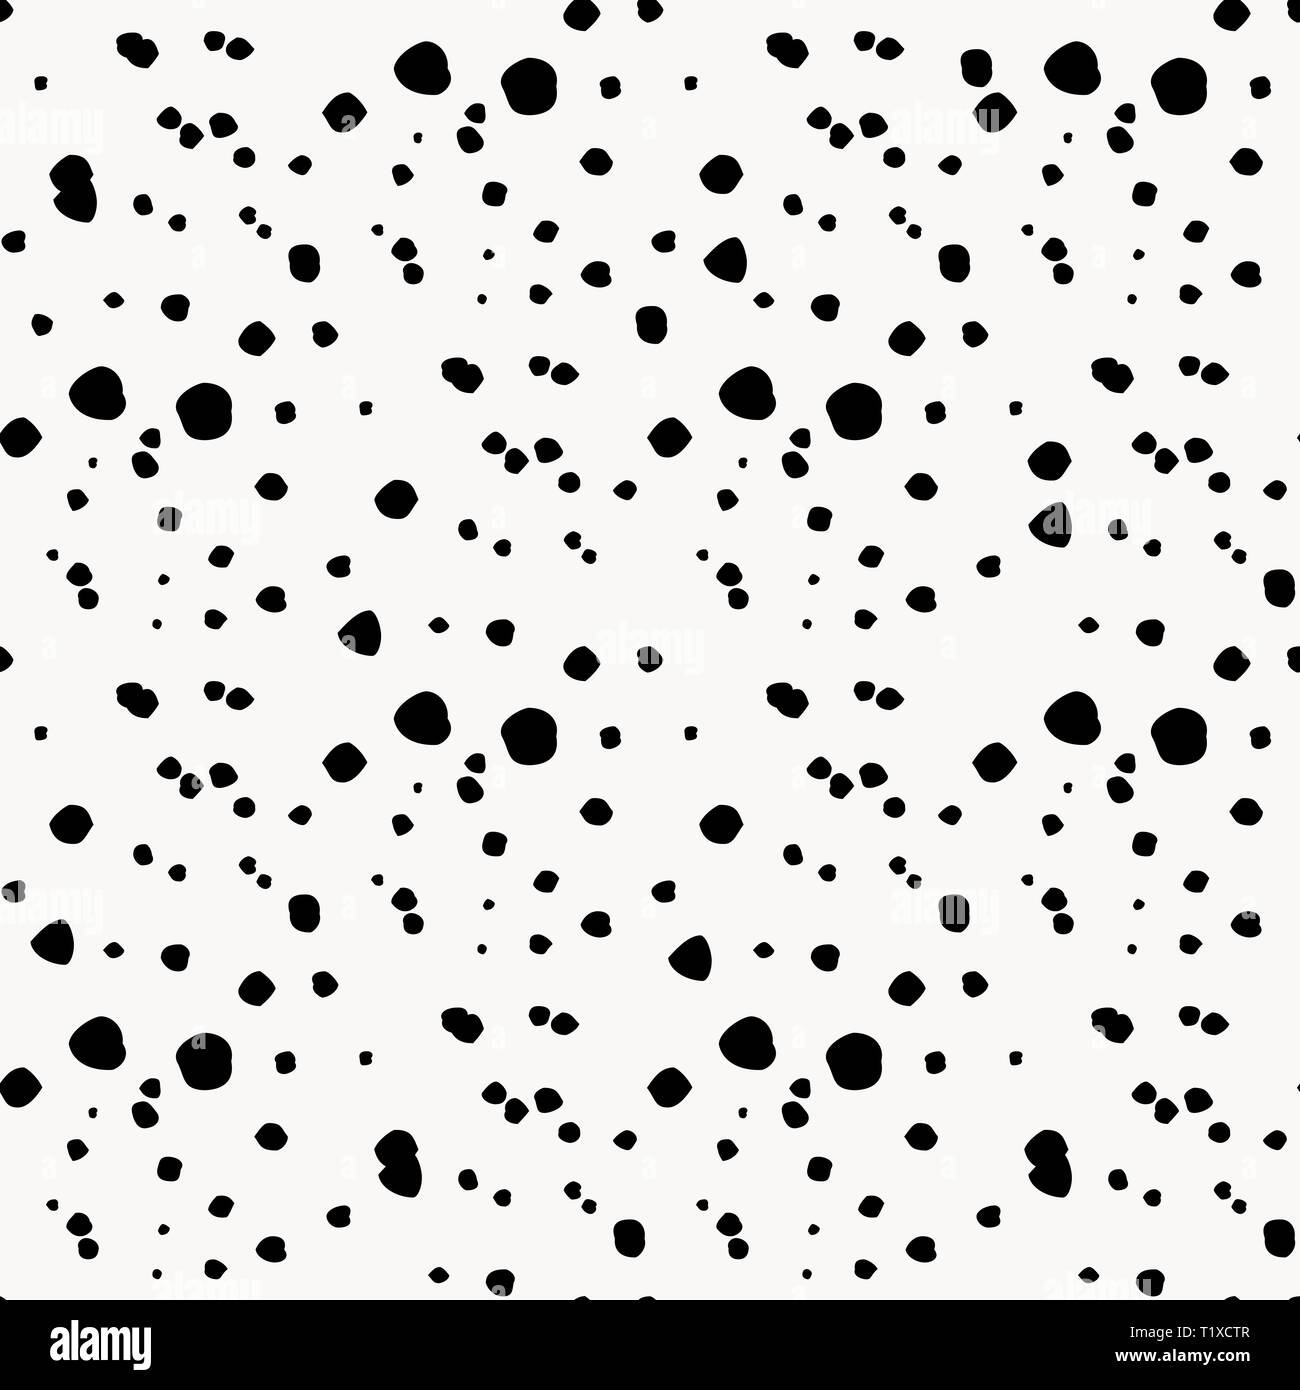 vector illustration of seamless black and white irrregular dots pattern ...